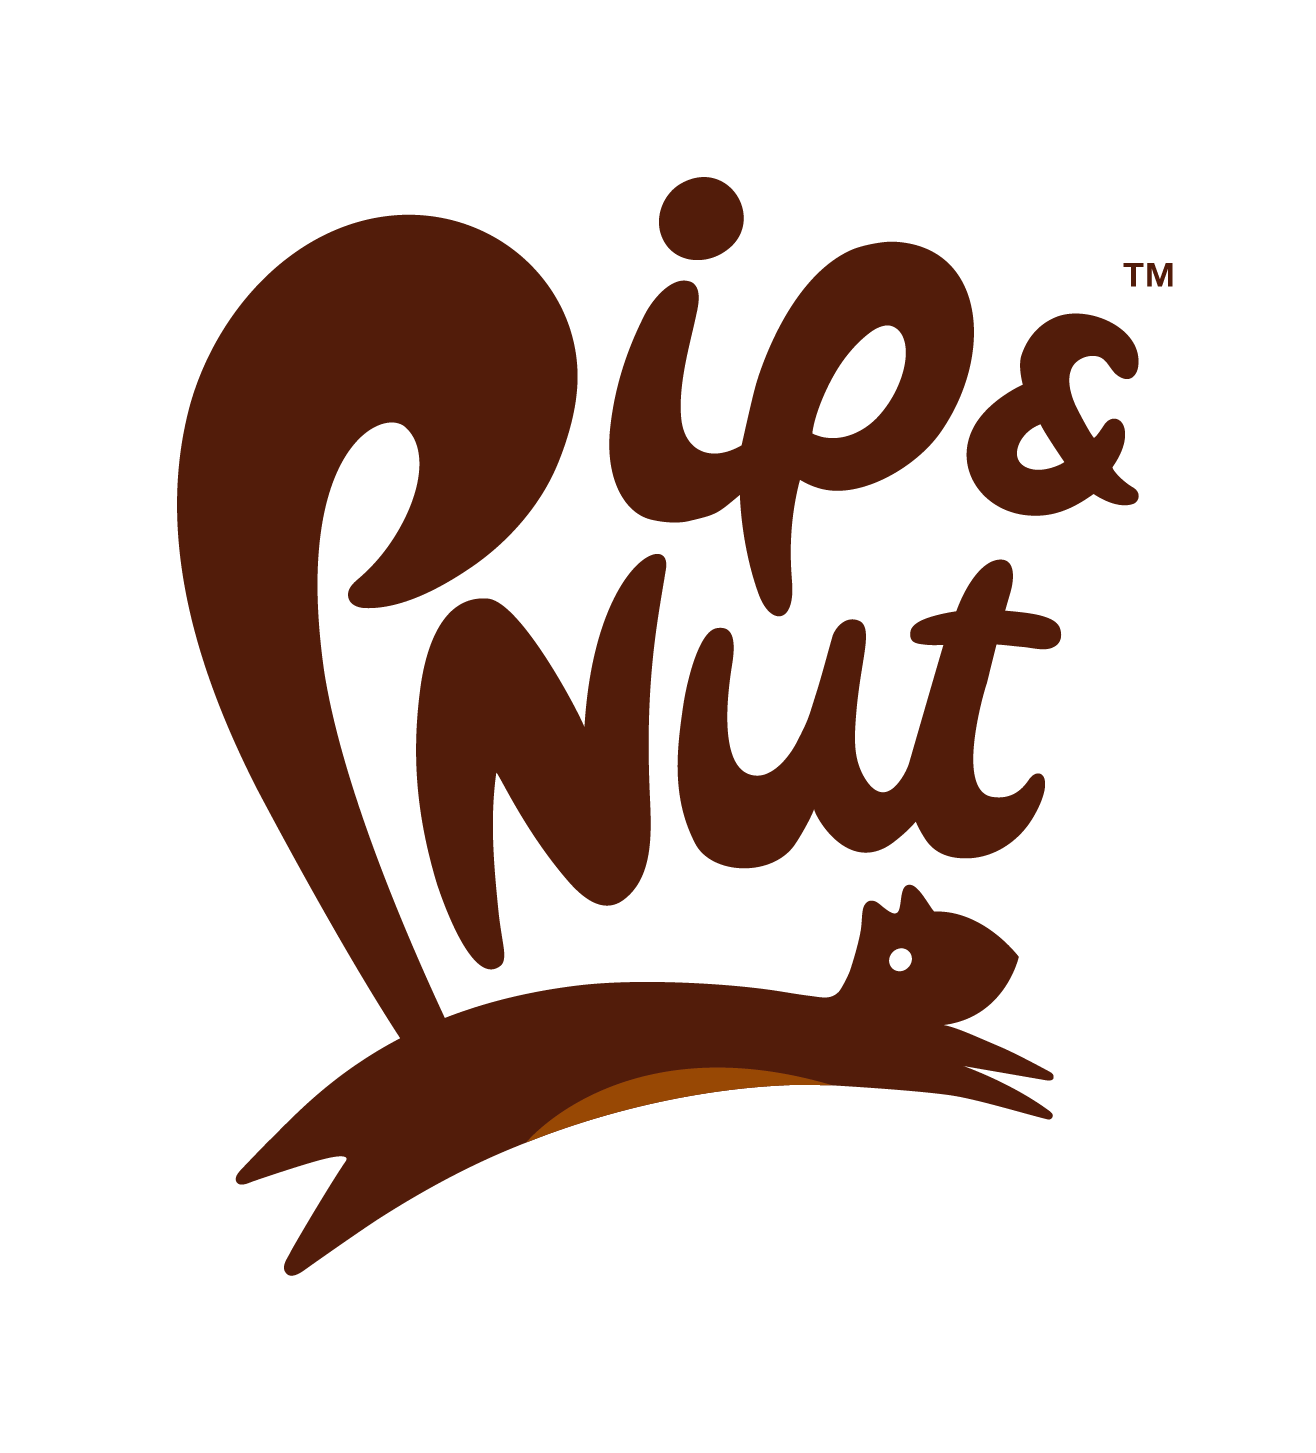 sponsor_pip&nut